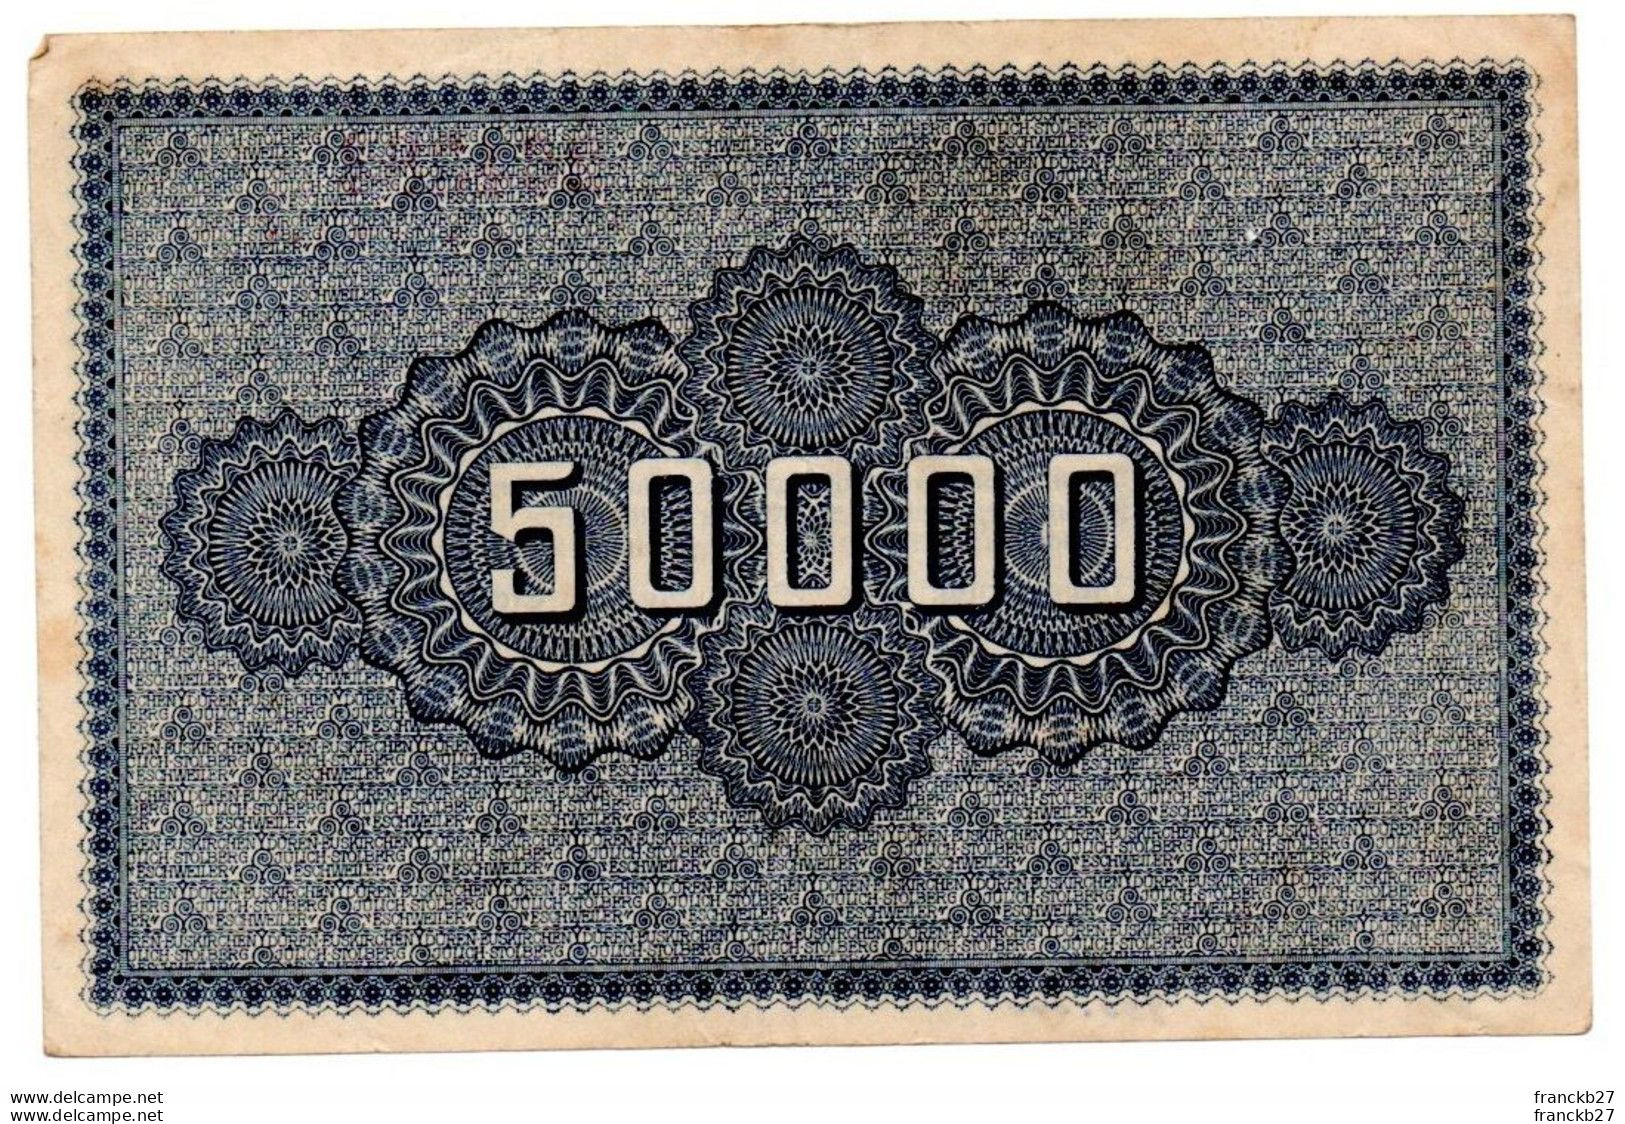 Deutschland - Germany - Allemagne - Billet Allemagne 1923 50000 Mark - Non Classificati